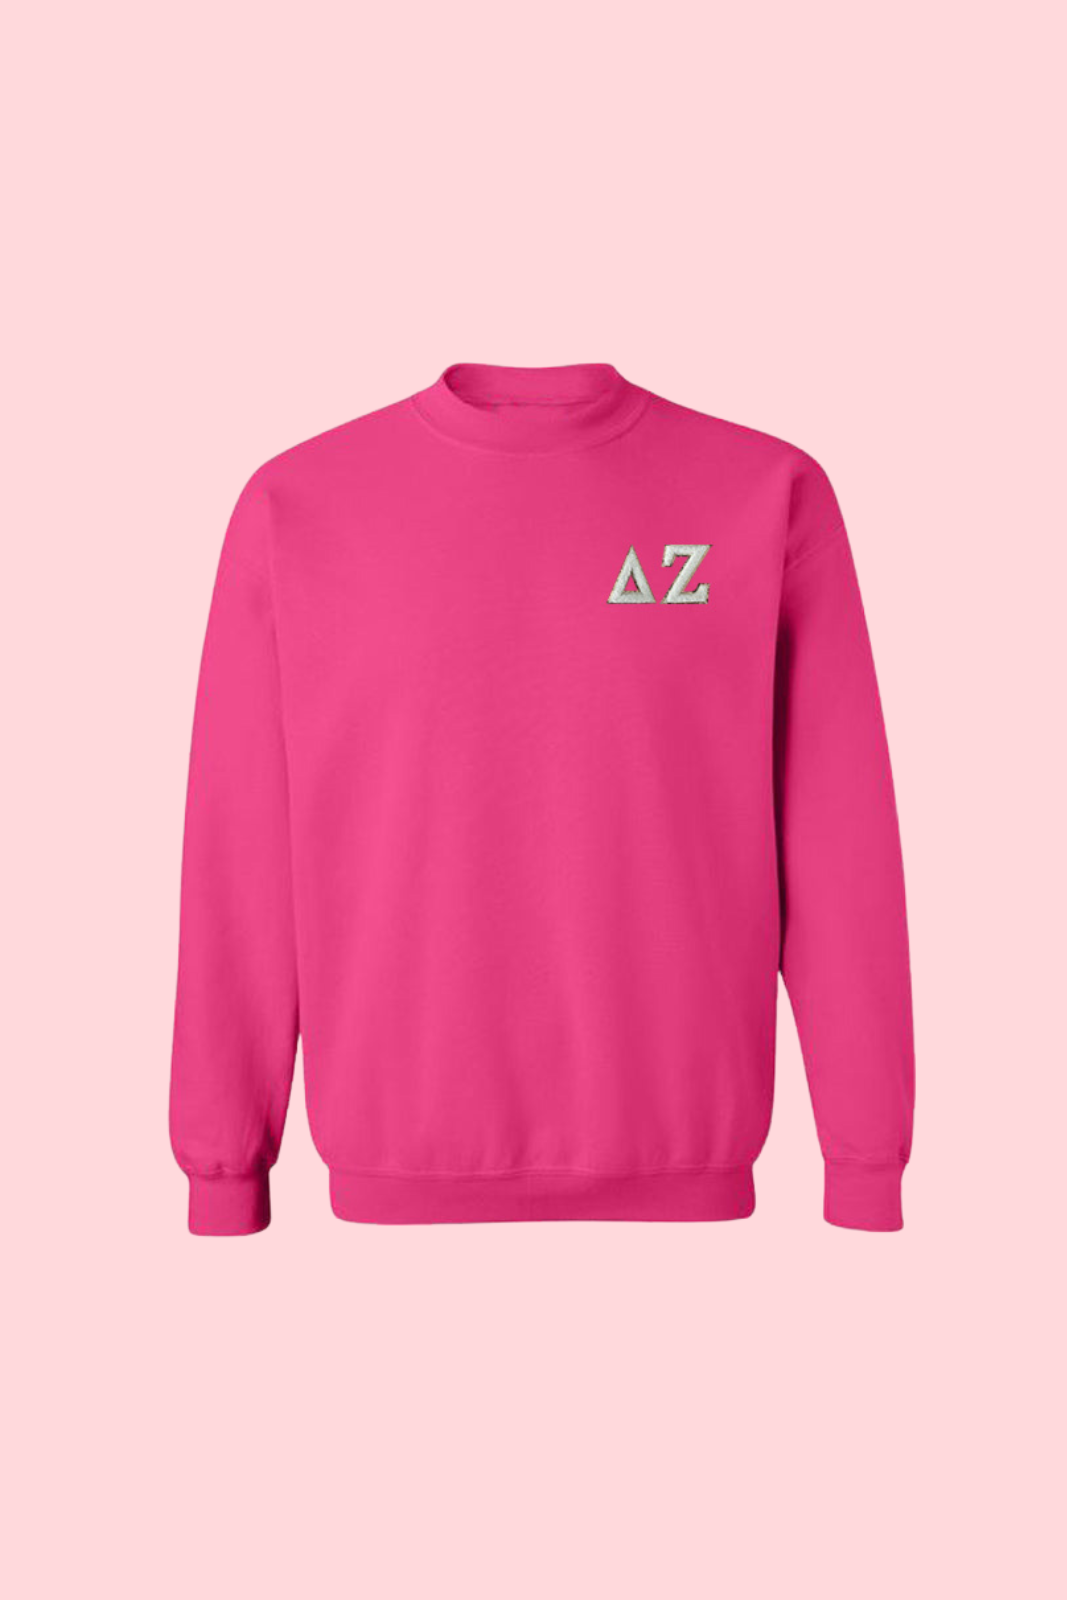 Varsity Sweatshirt - Greek Letters